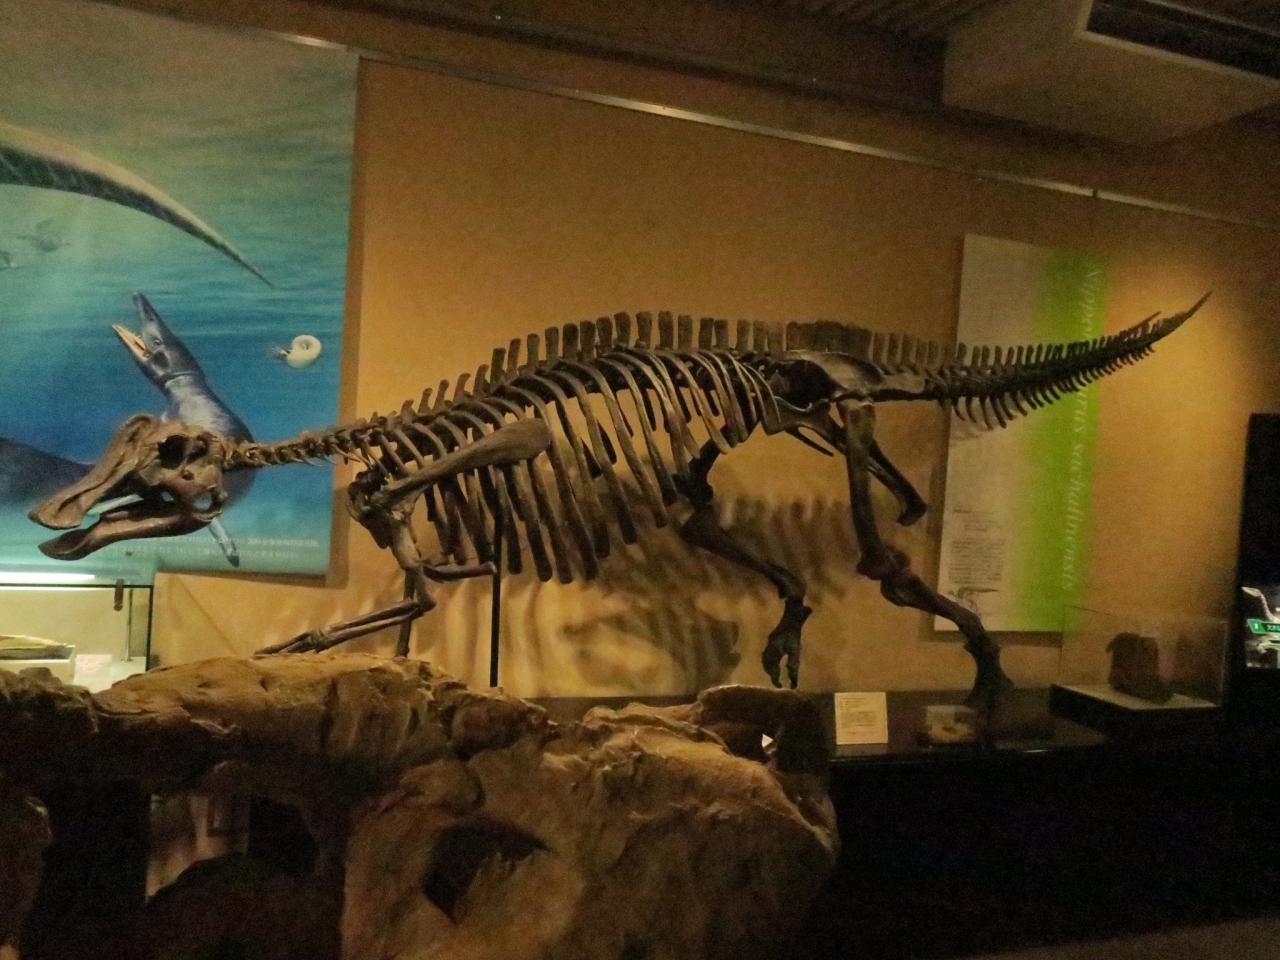 22 Jan 北海道大学総合博物館の恐竜化石を見て来ました 札幌 北海道 の旅行記 ブログ By Angelエンゲルさん フォートラベル